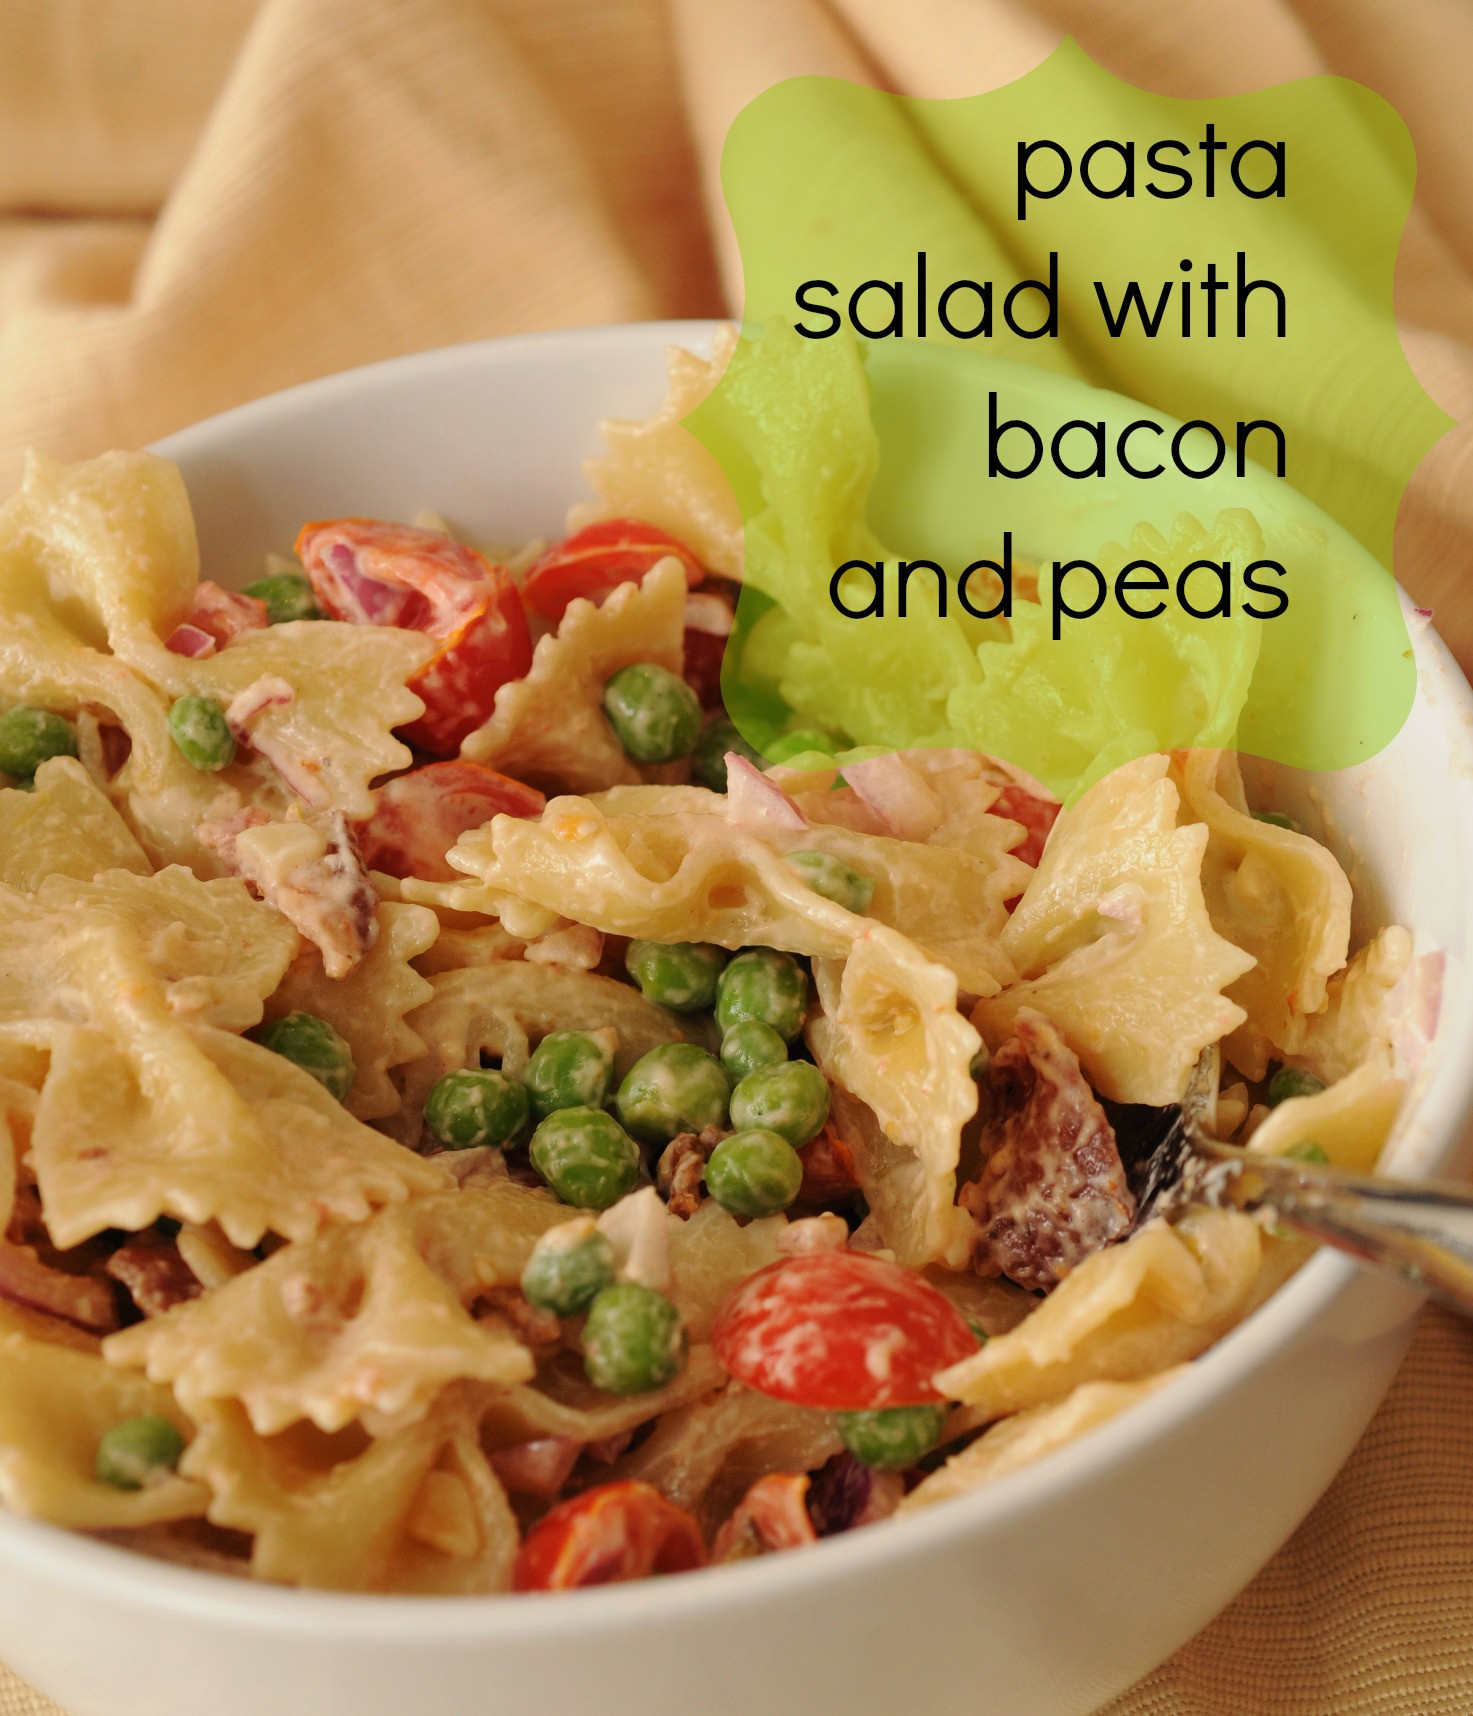 Pasta Salad With Bacon
 Pasta Salad With Bacon Peas & Grape Tomatoes The